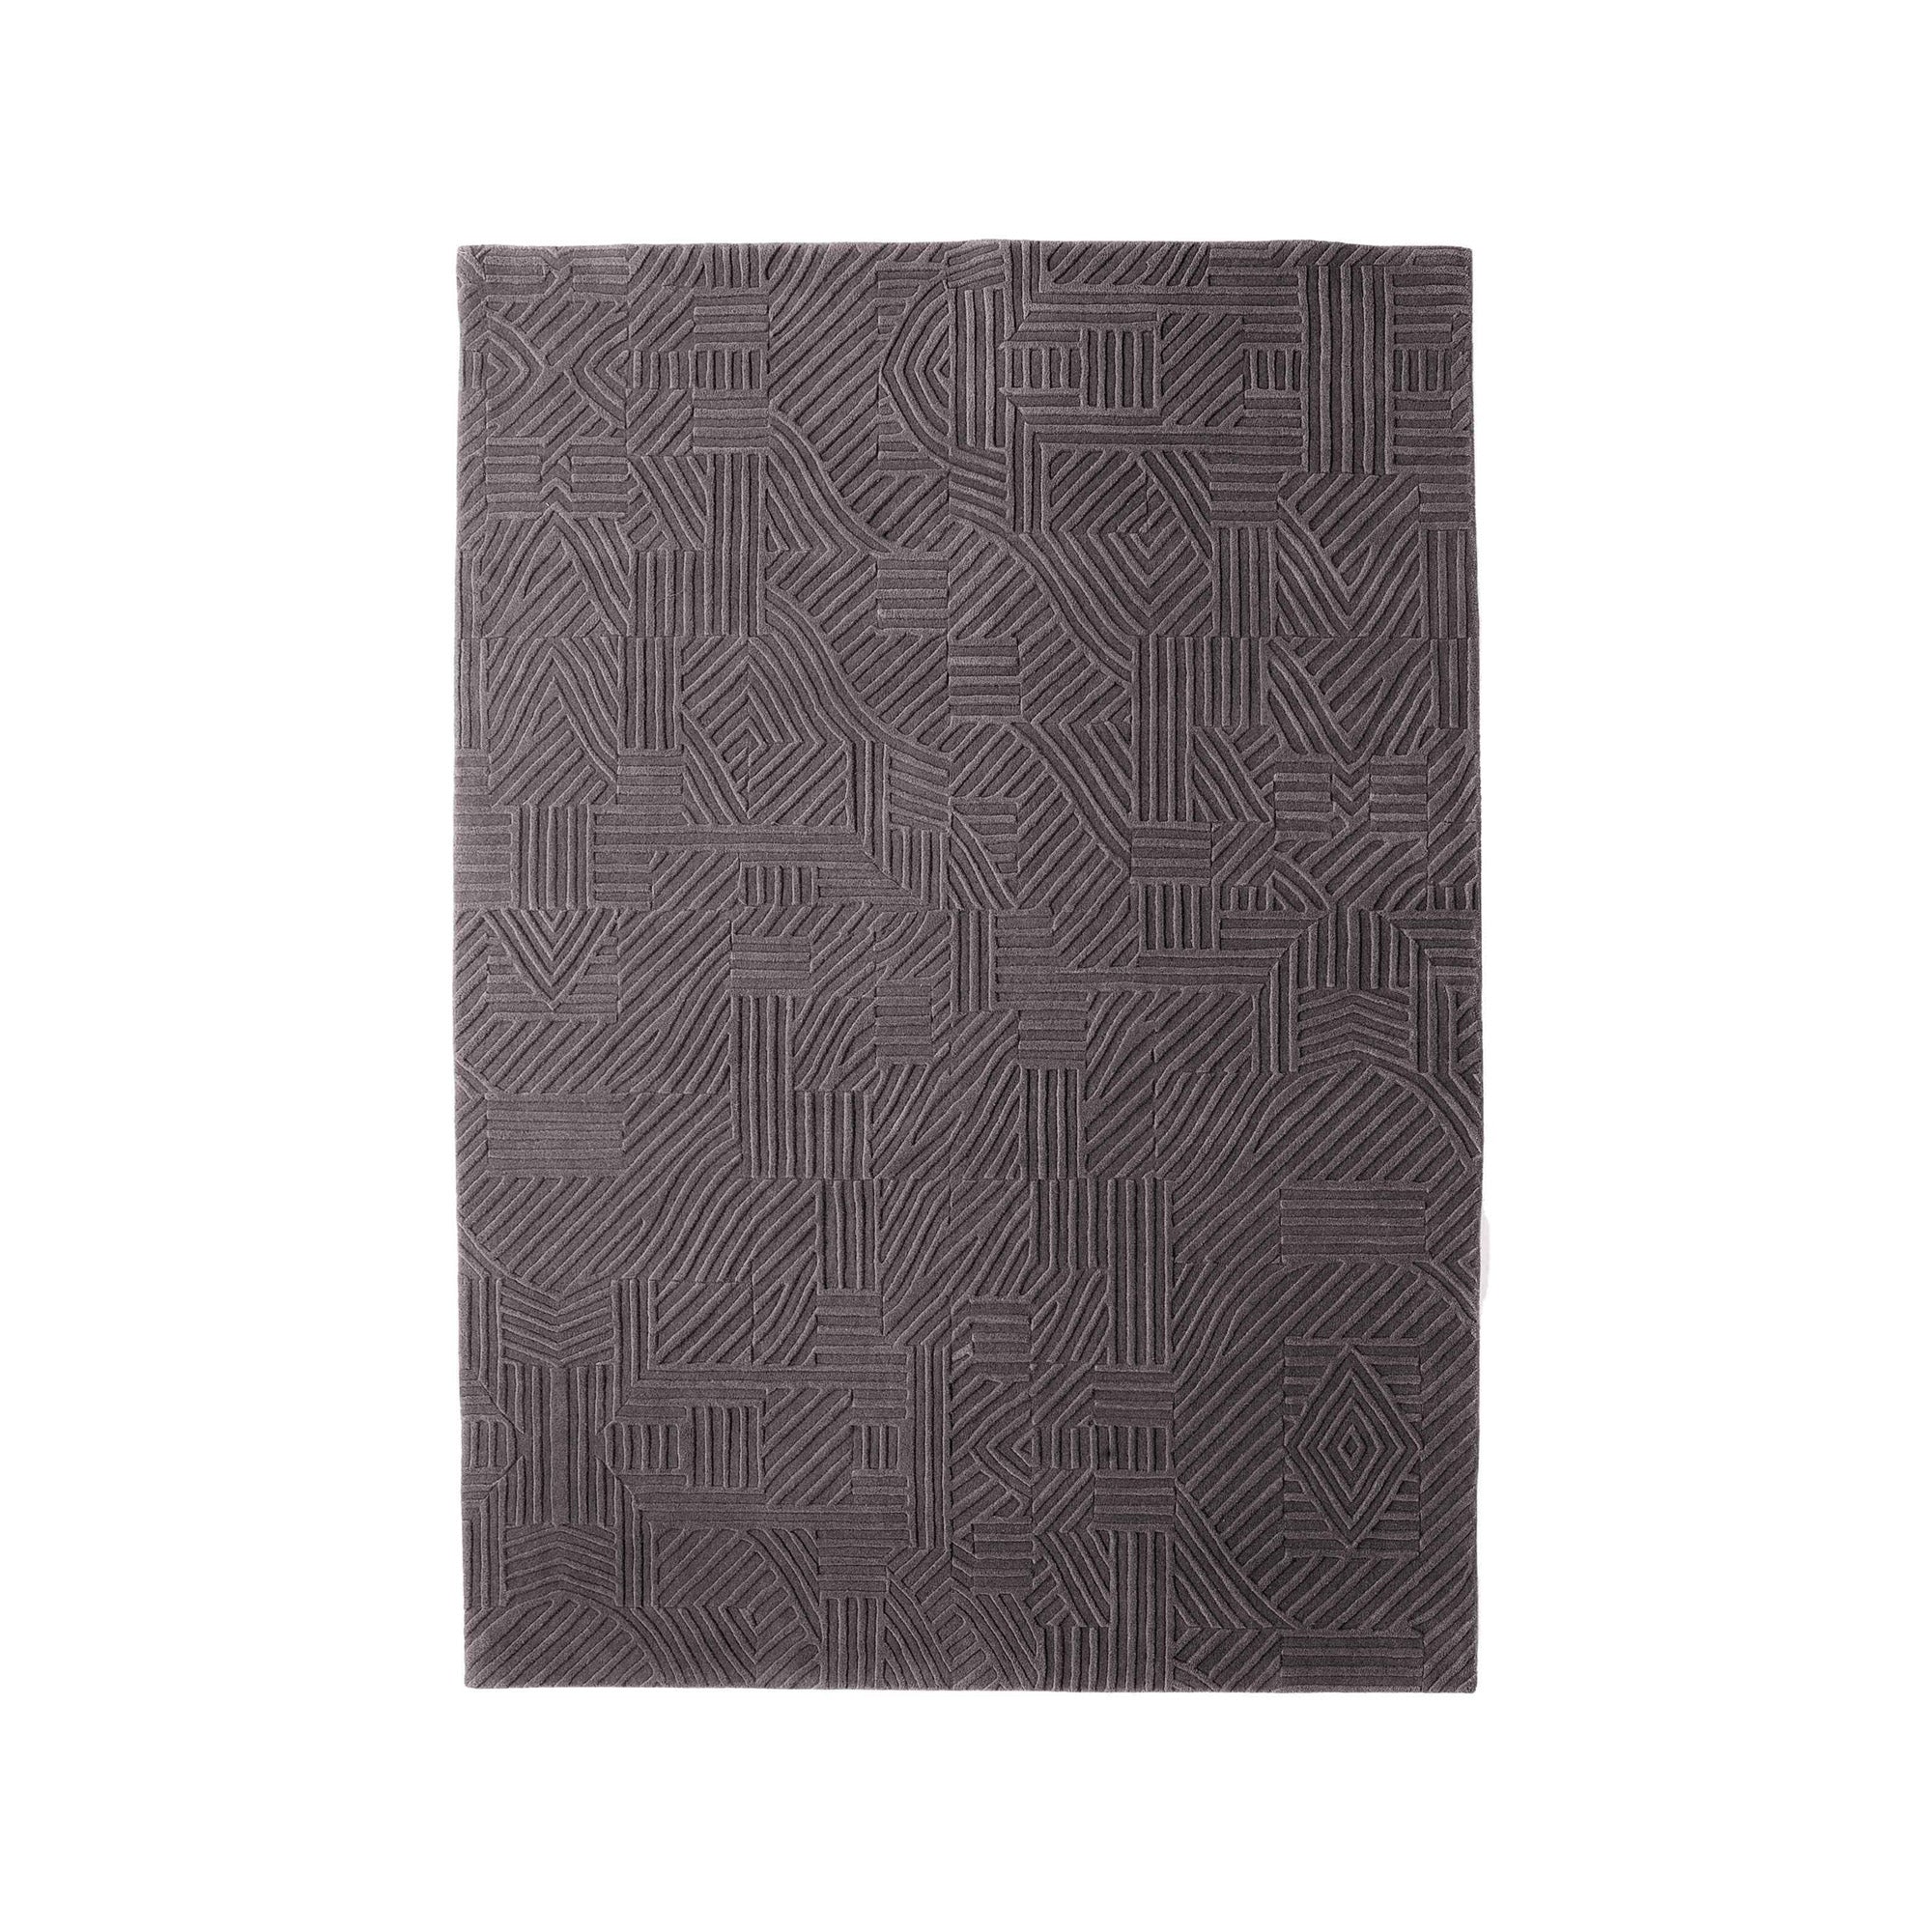 Milton Glaser African Pattern Rug